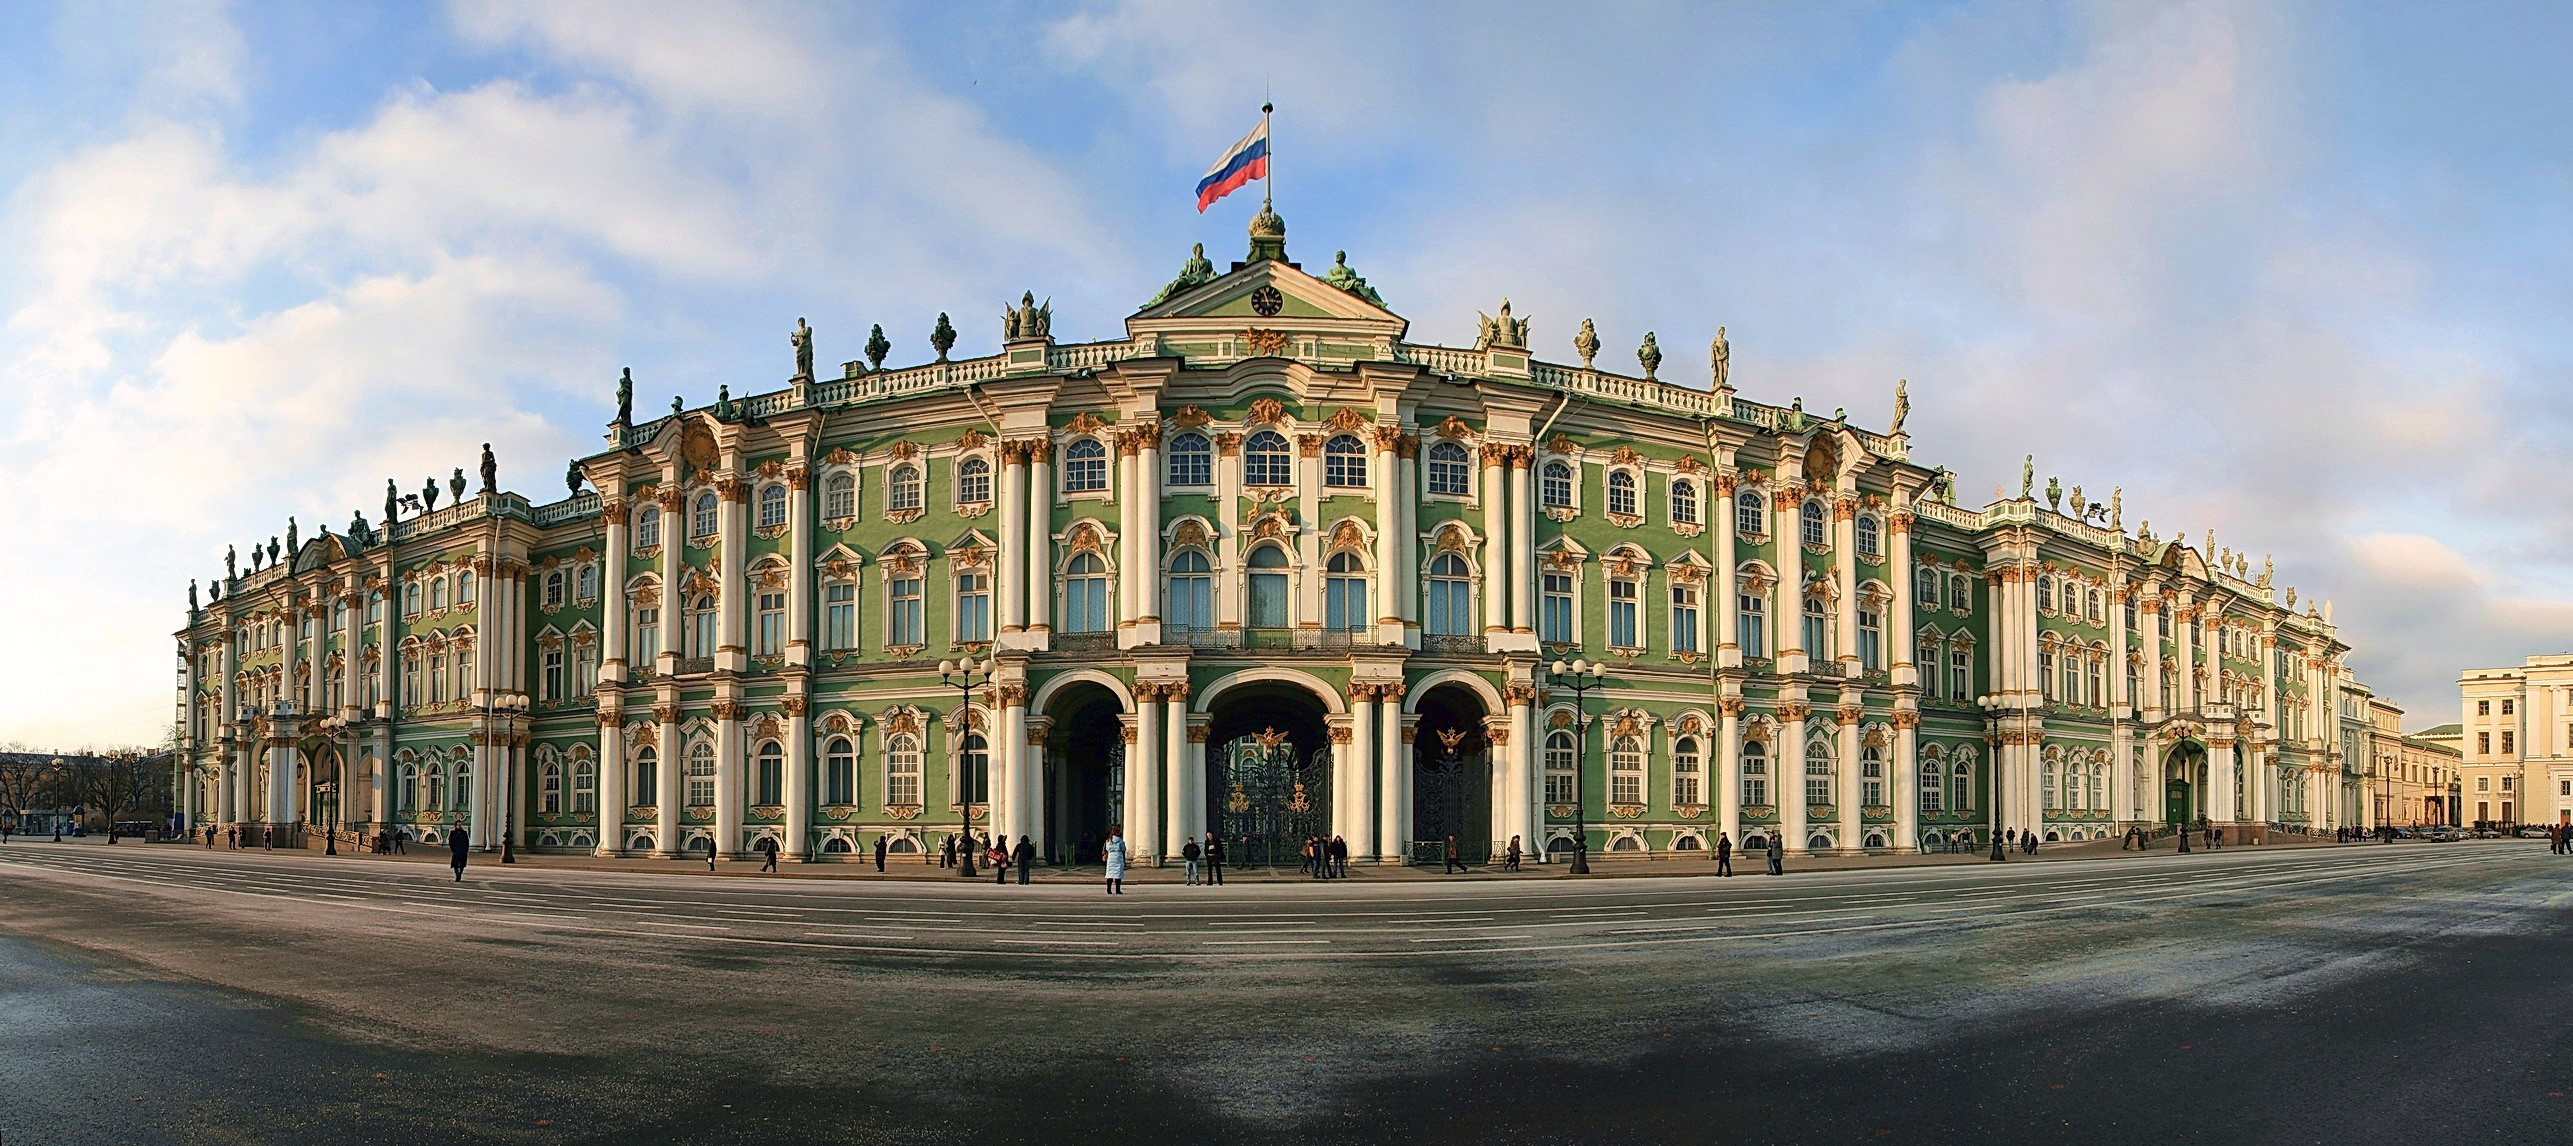 winter palace tour - St Petersburg Smart Free Tour